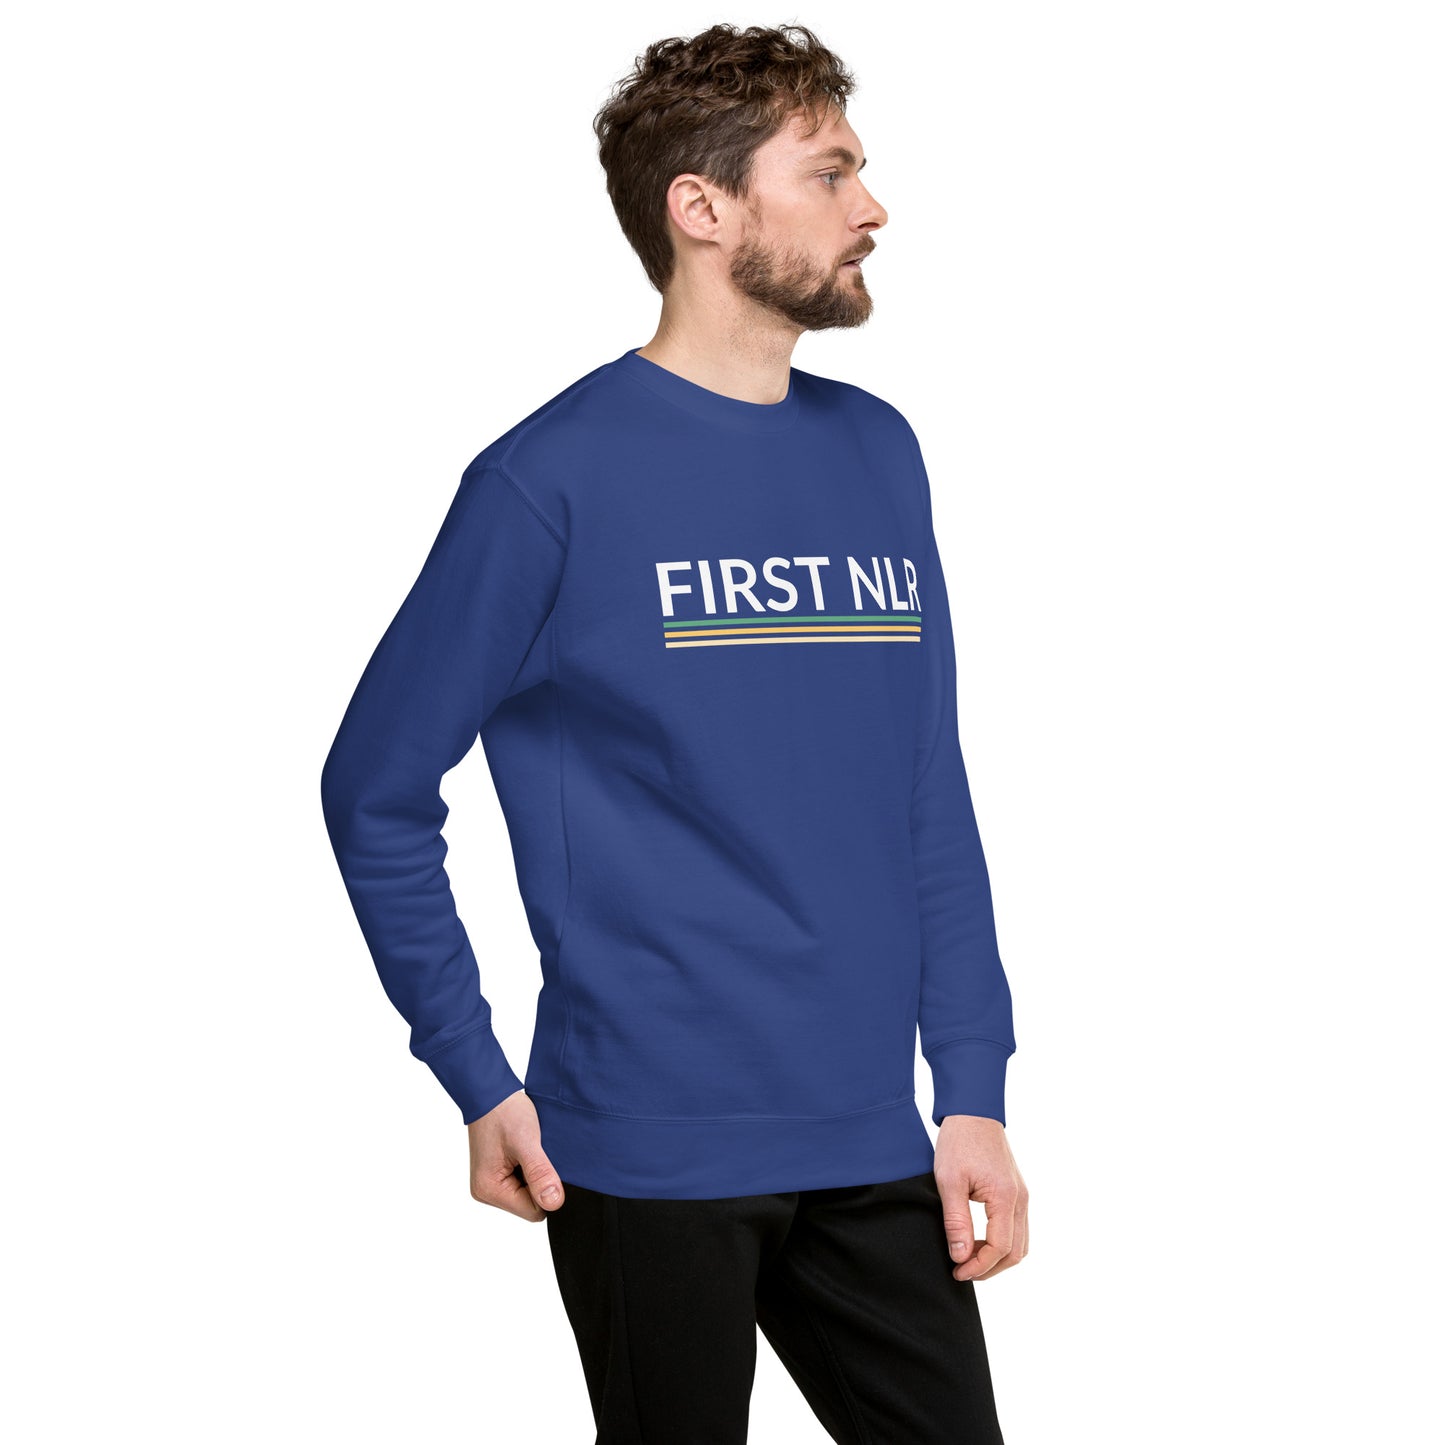 First NLR Lined Sweatshirt